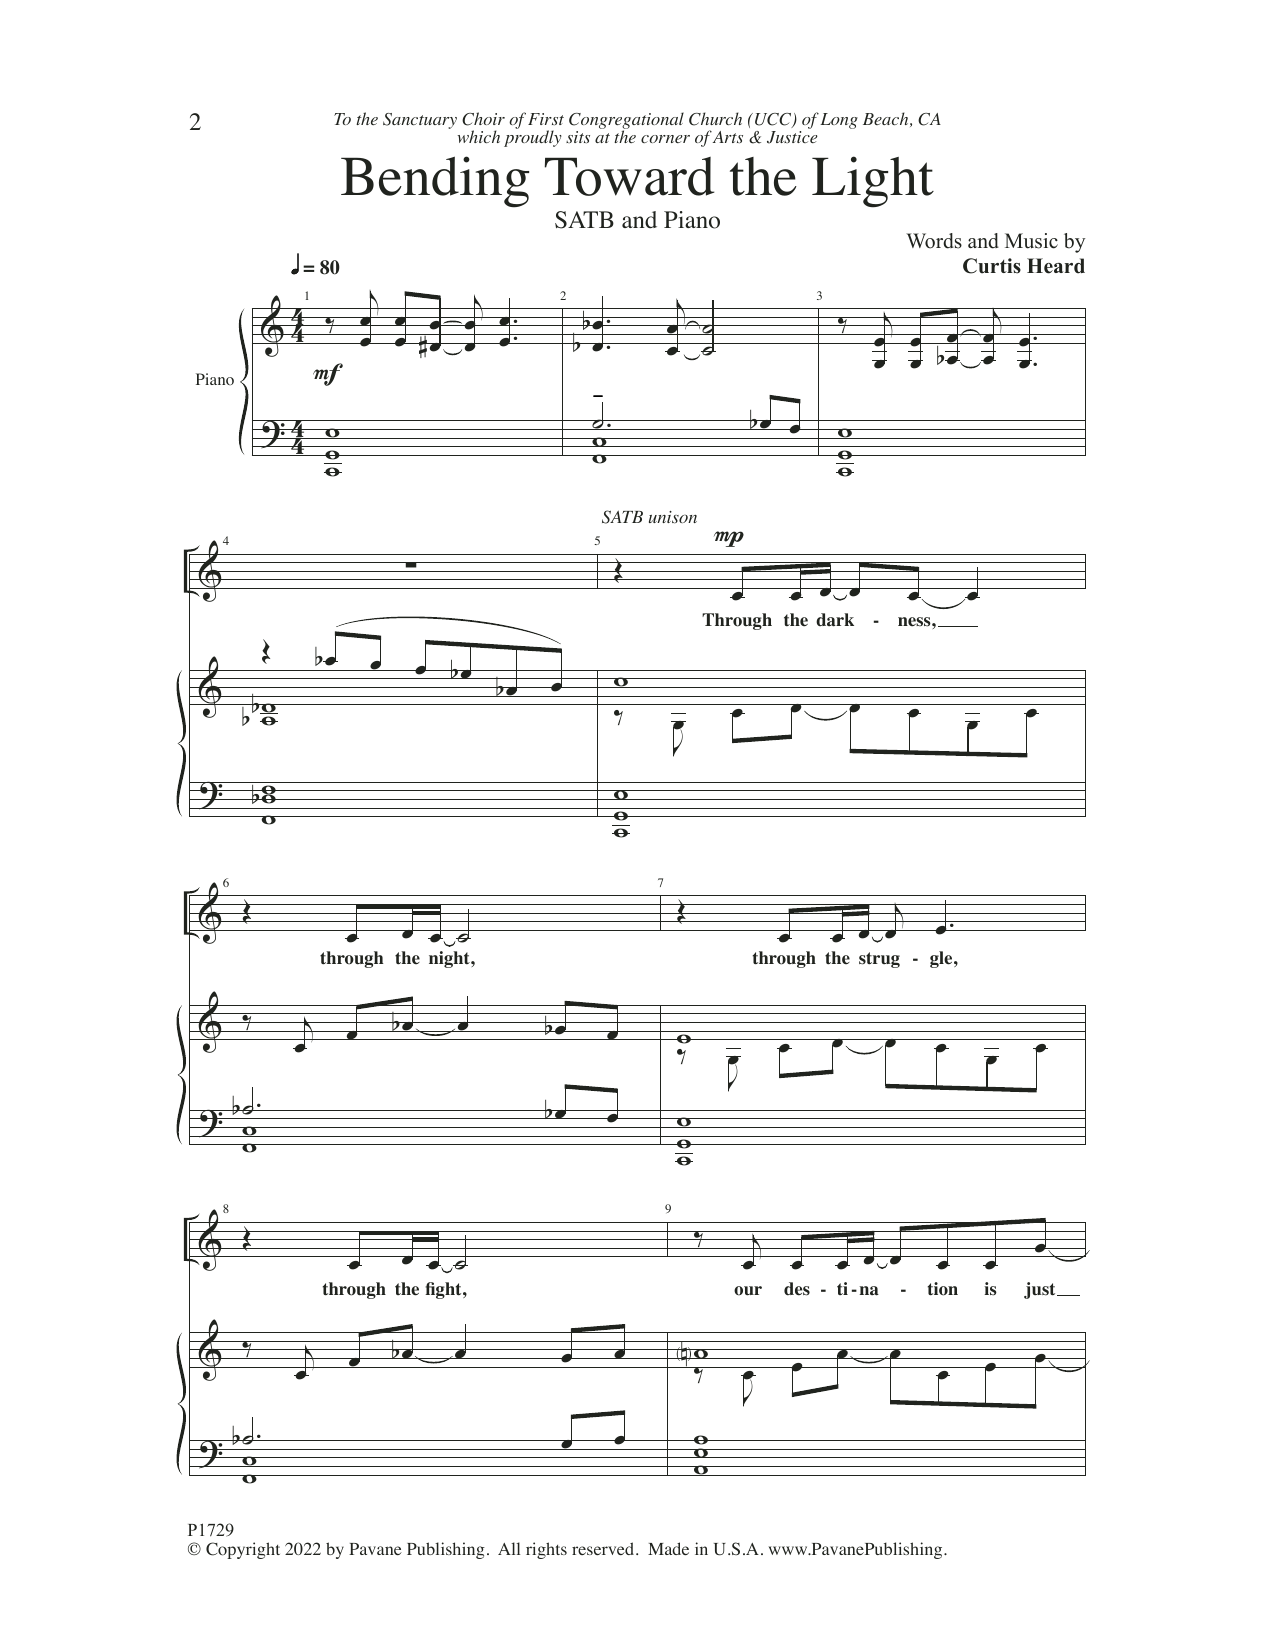 Curtis Heard Bending Toward The Light Sheet Music Notes & Chords for SATB Choir - Download or Print PDF